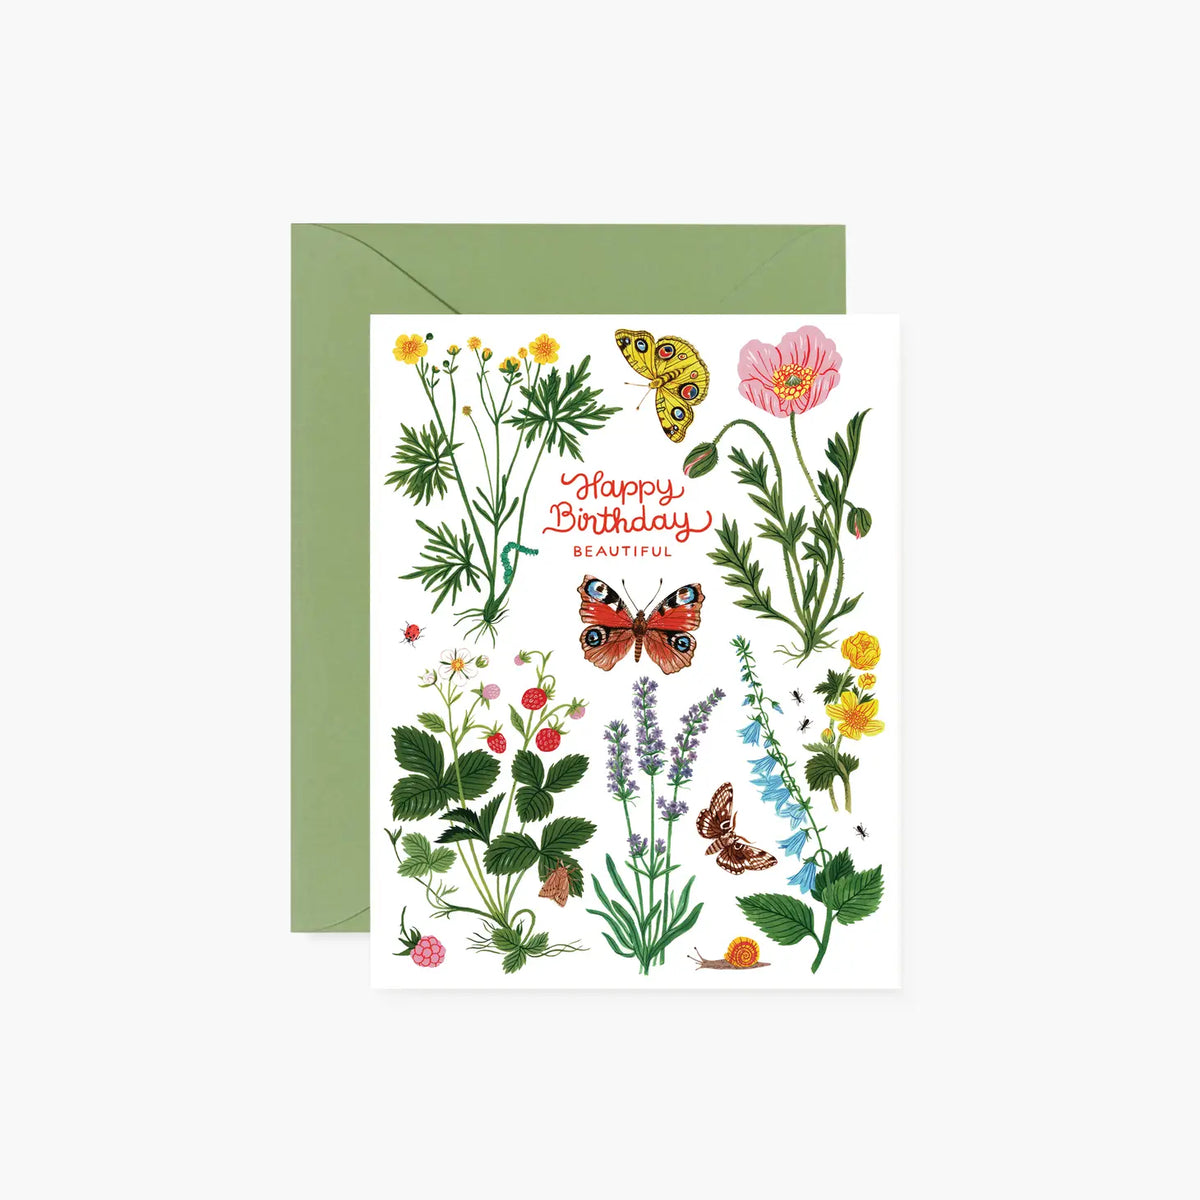 Birthday card 'Prairie' by Botanica Paper co.